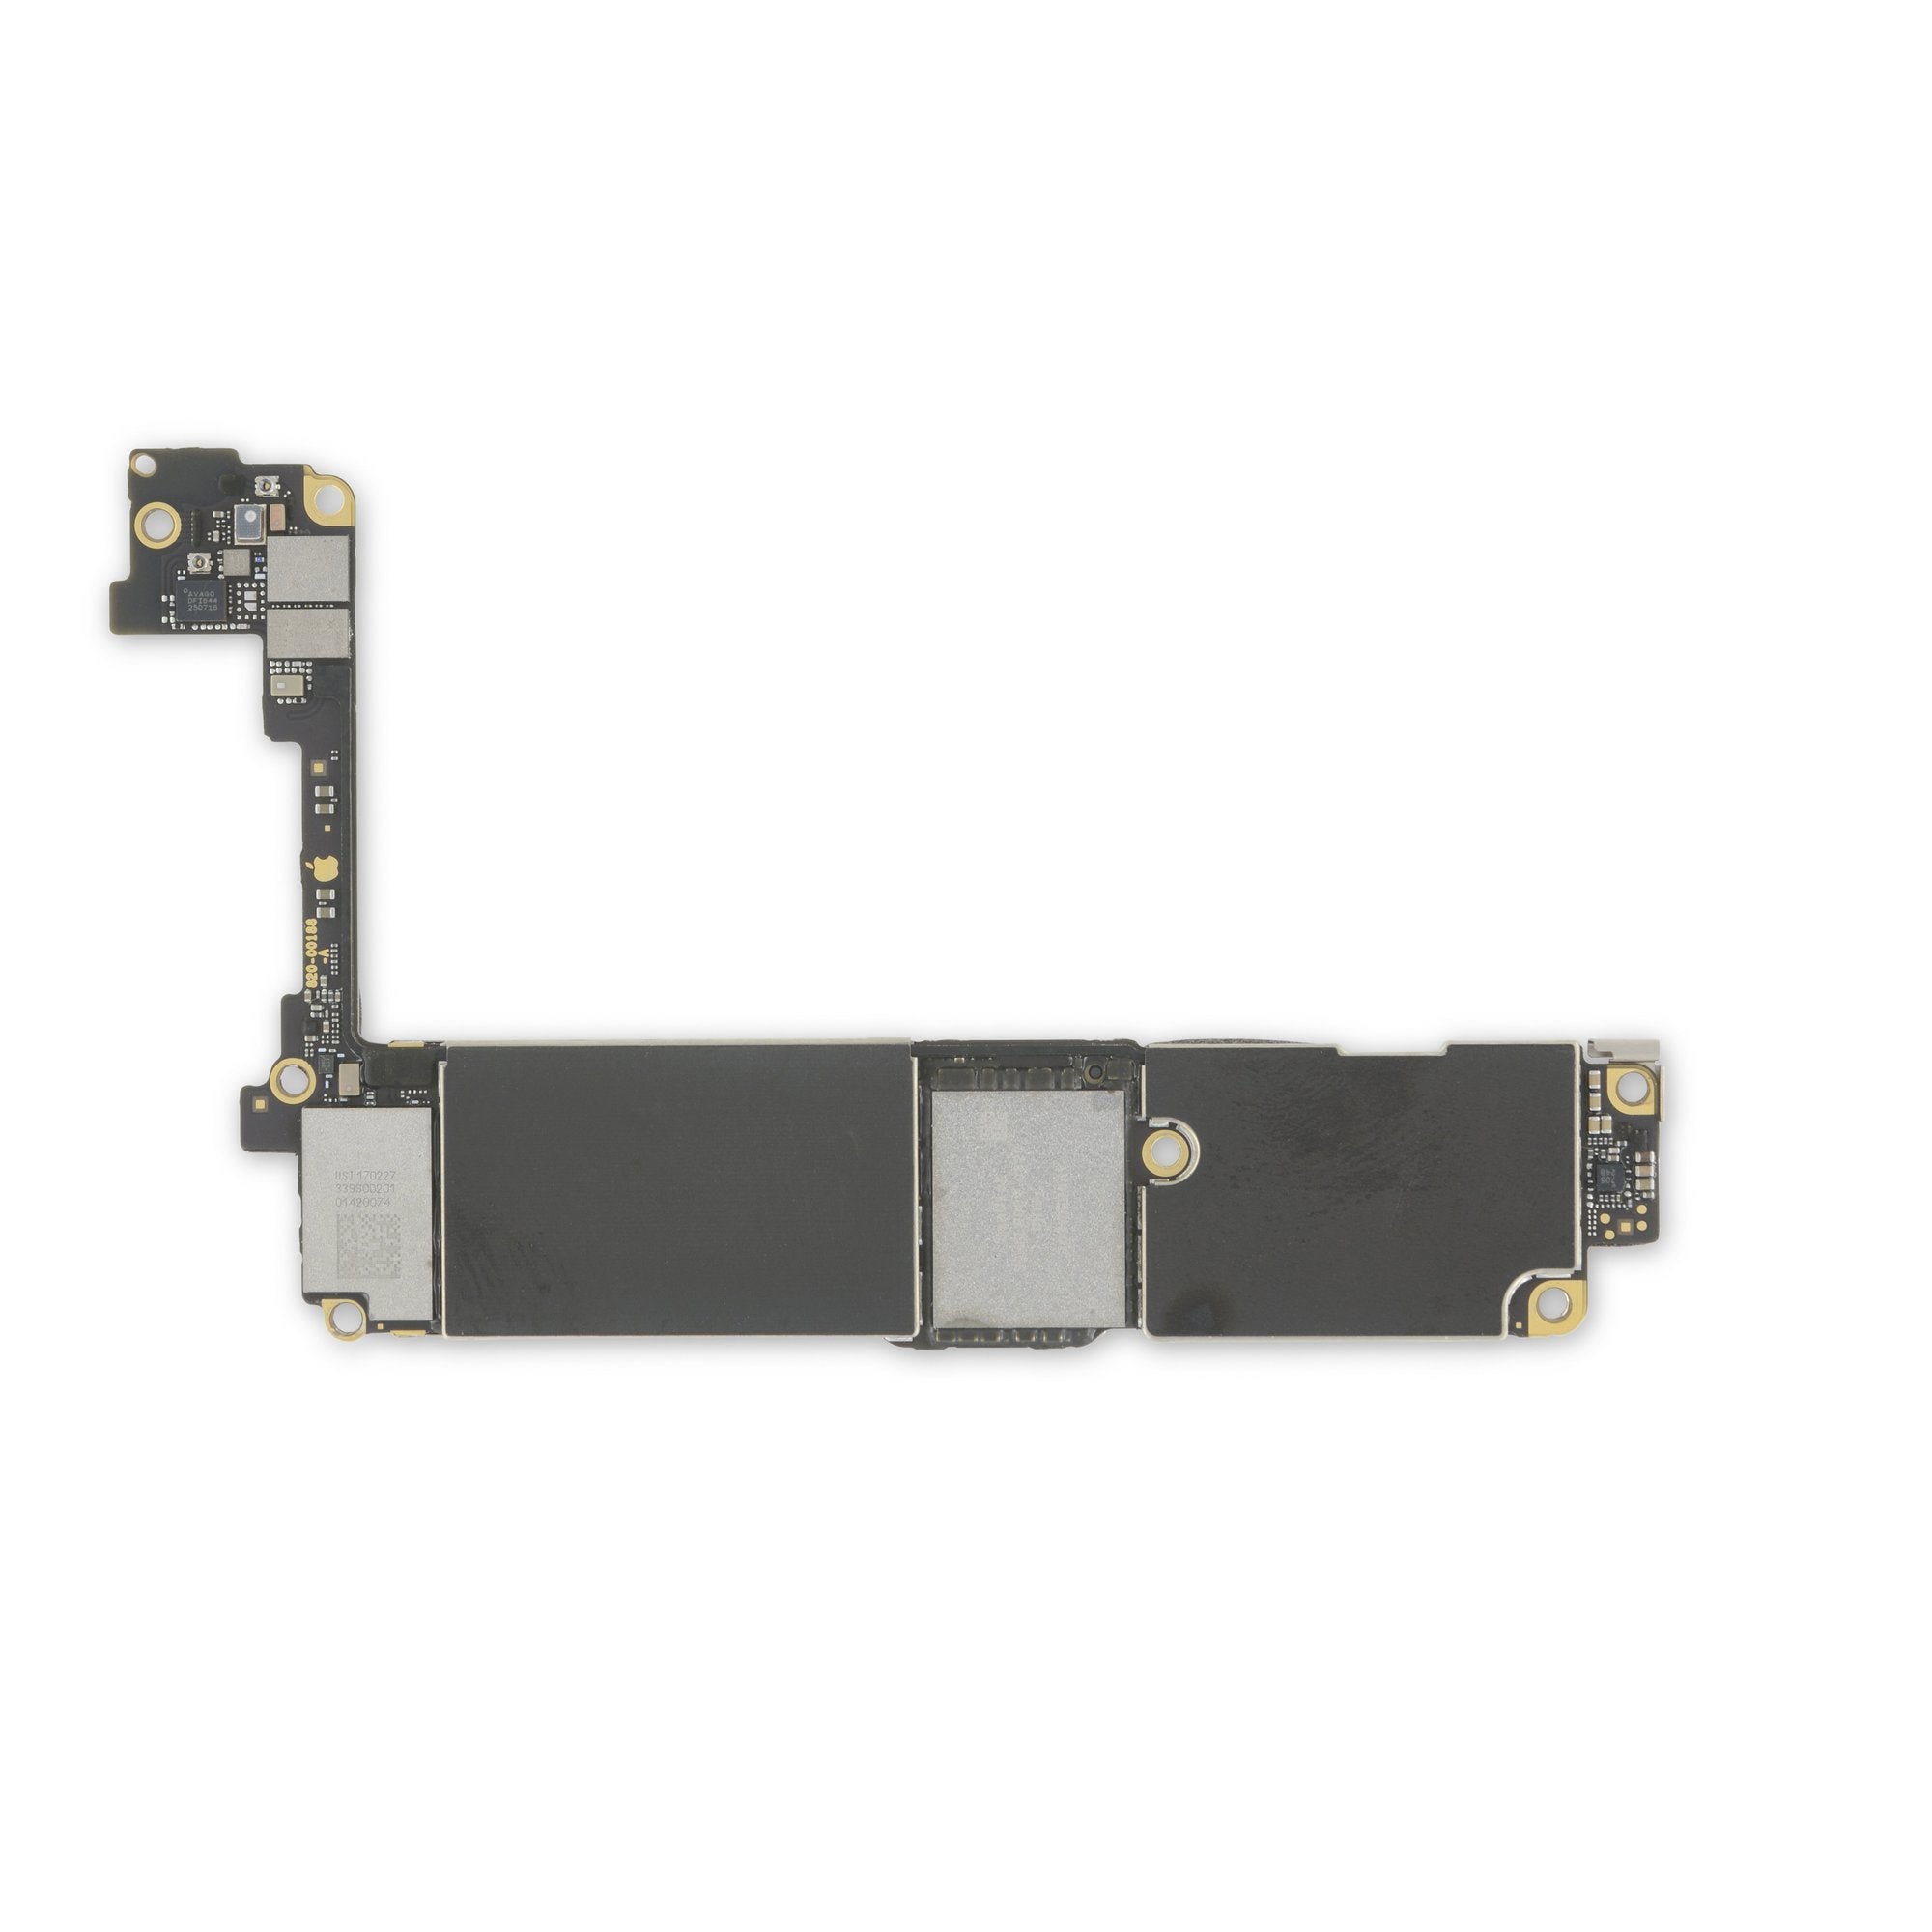 iPhone 7 A1778 (T-Mobile) Logic Board 32 GB Used